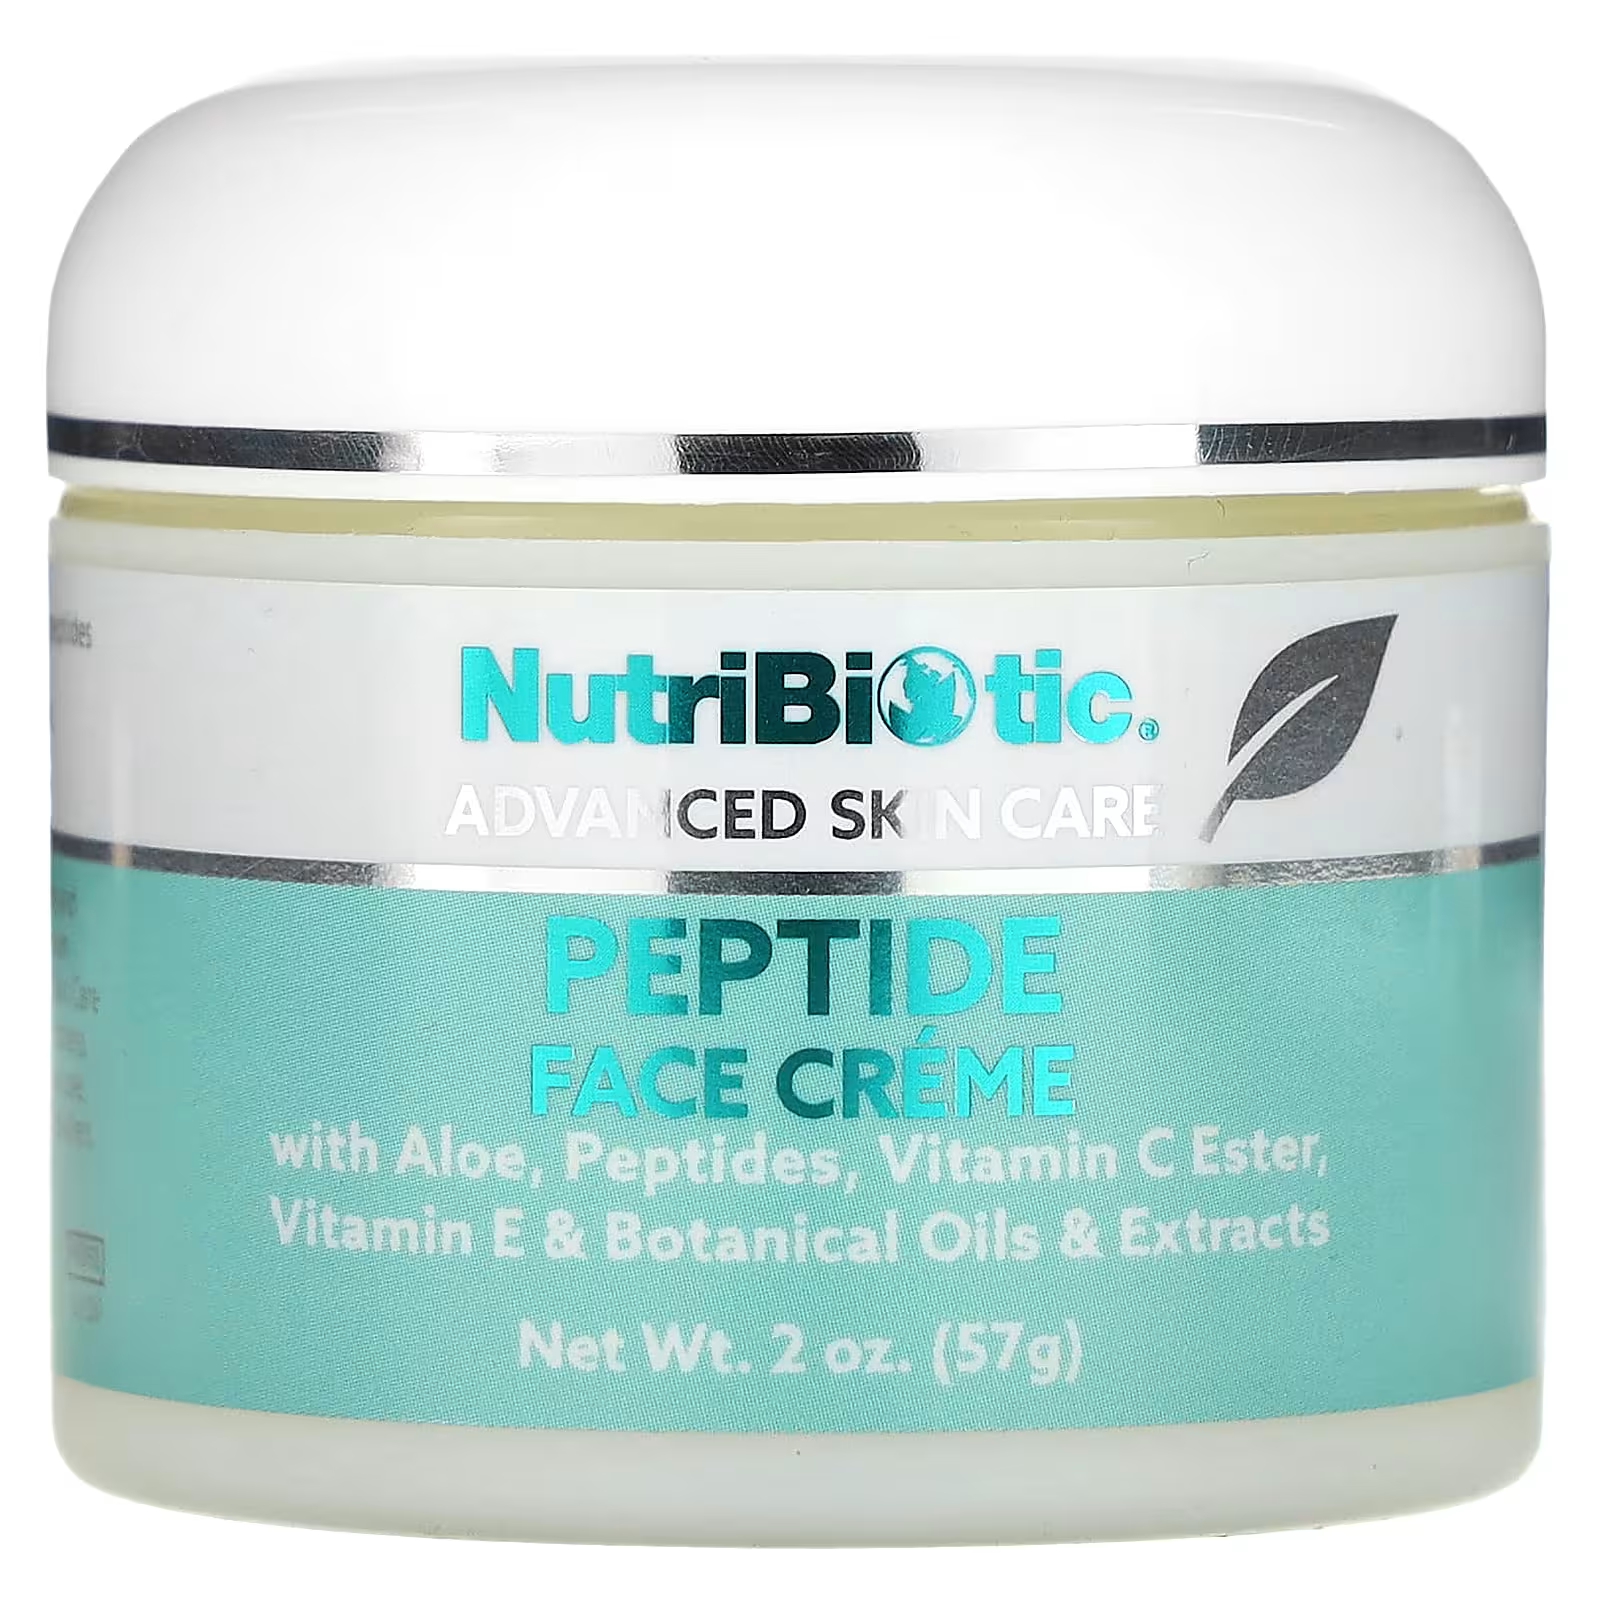 Крем пептидный NutriBiotic Advanced Skin Care для лица, 57 г крем пептидный nutribiotic advanced skin care для лица 57 г